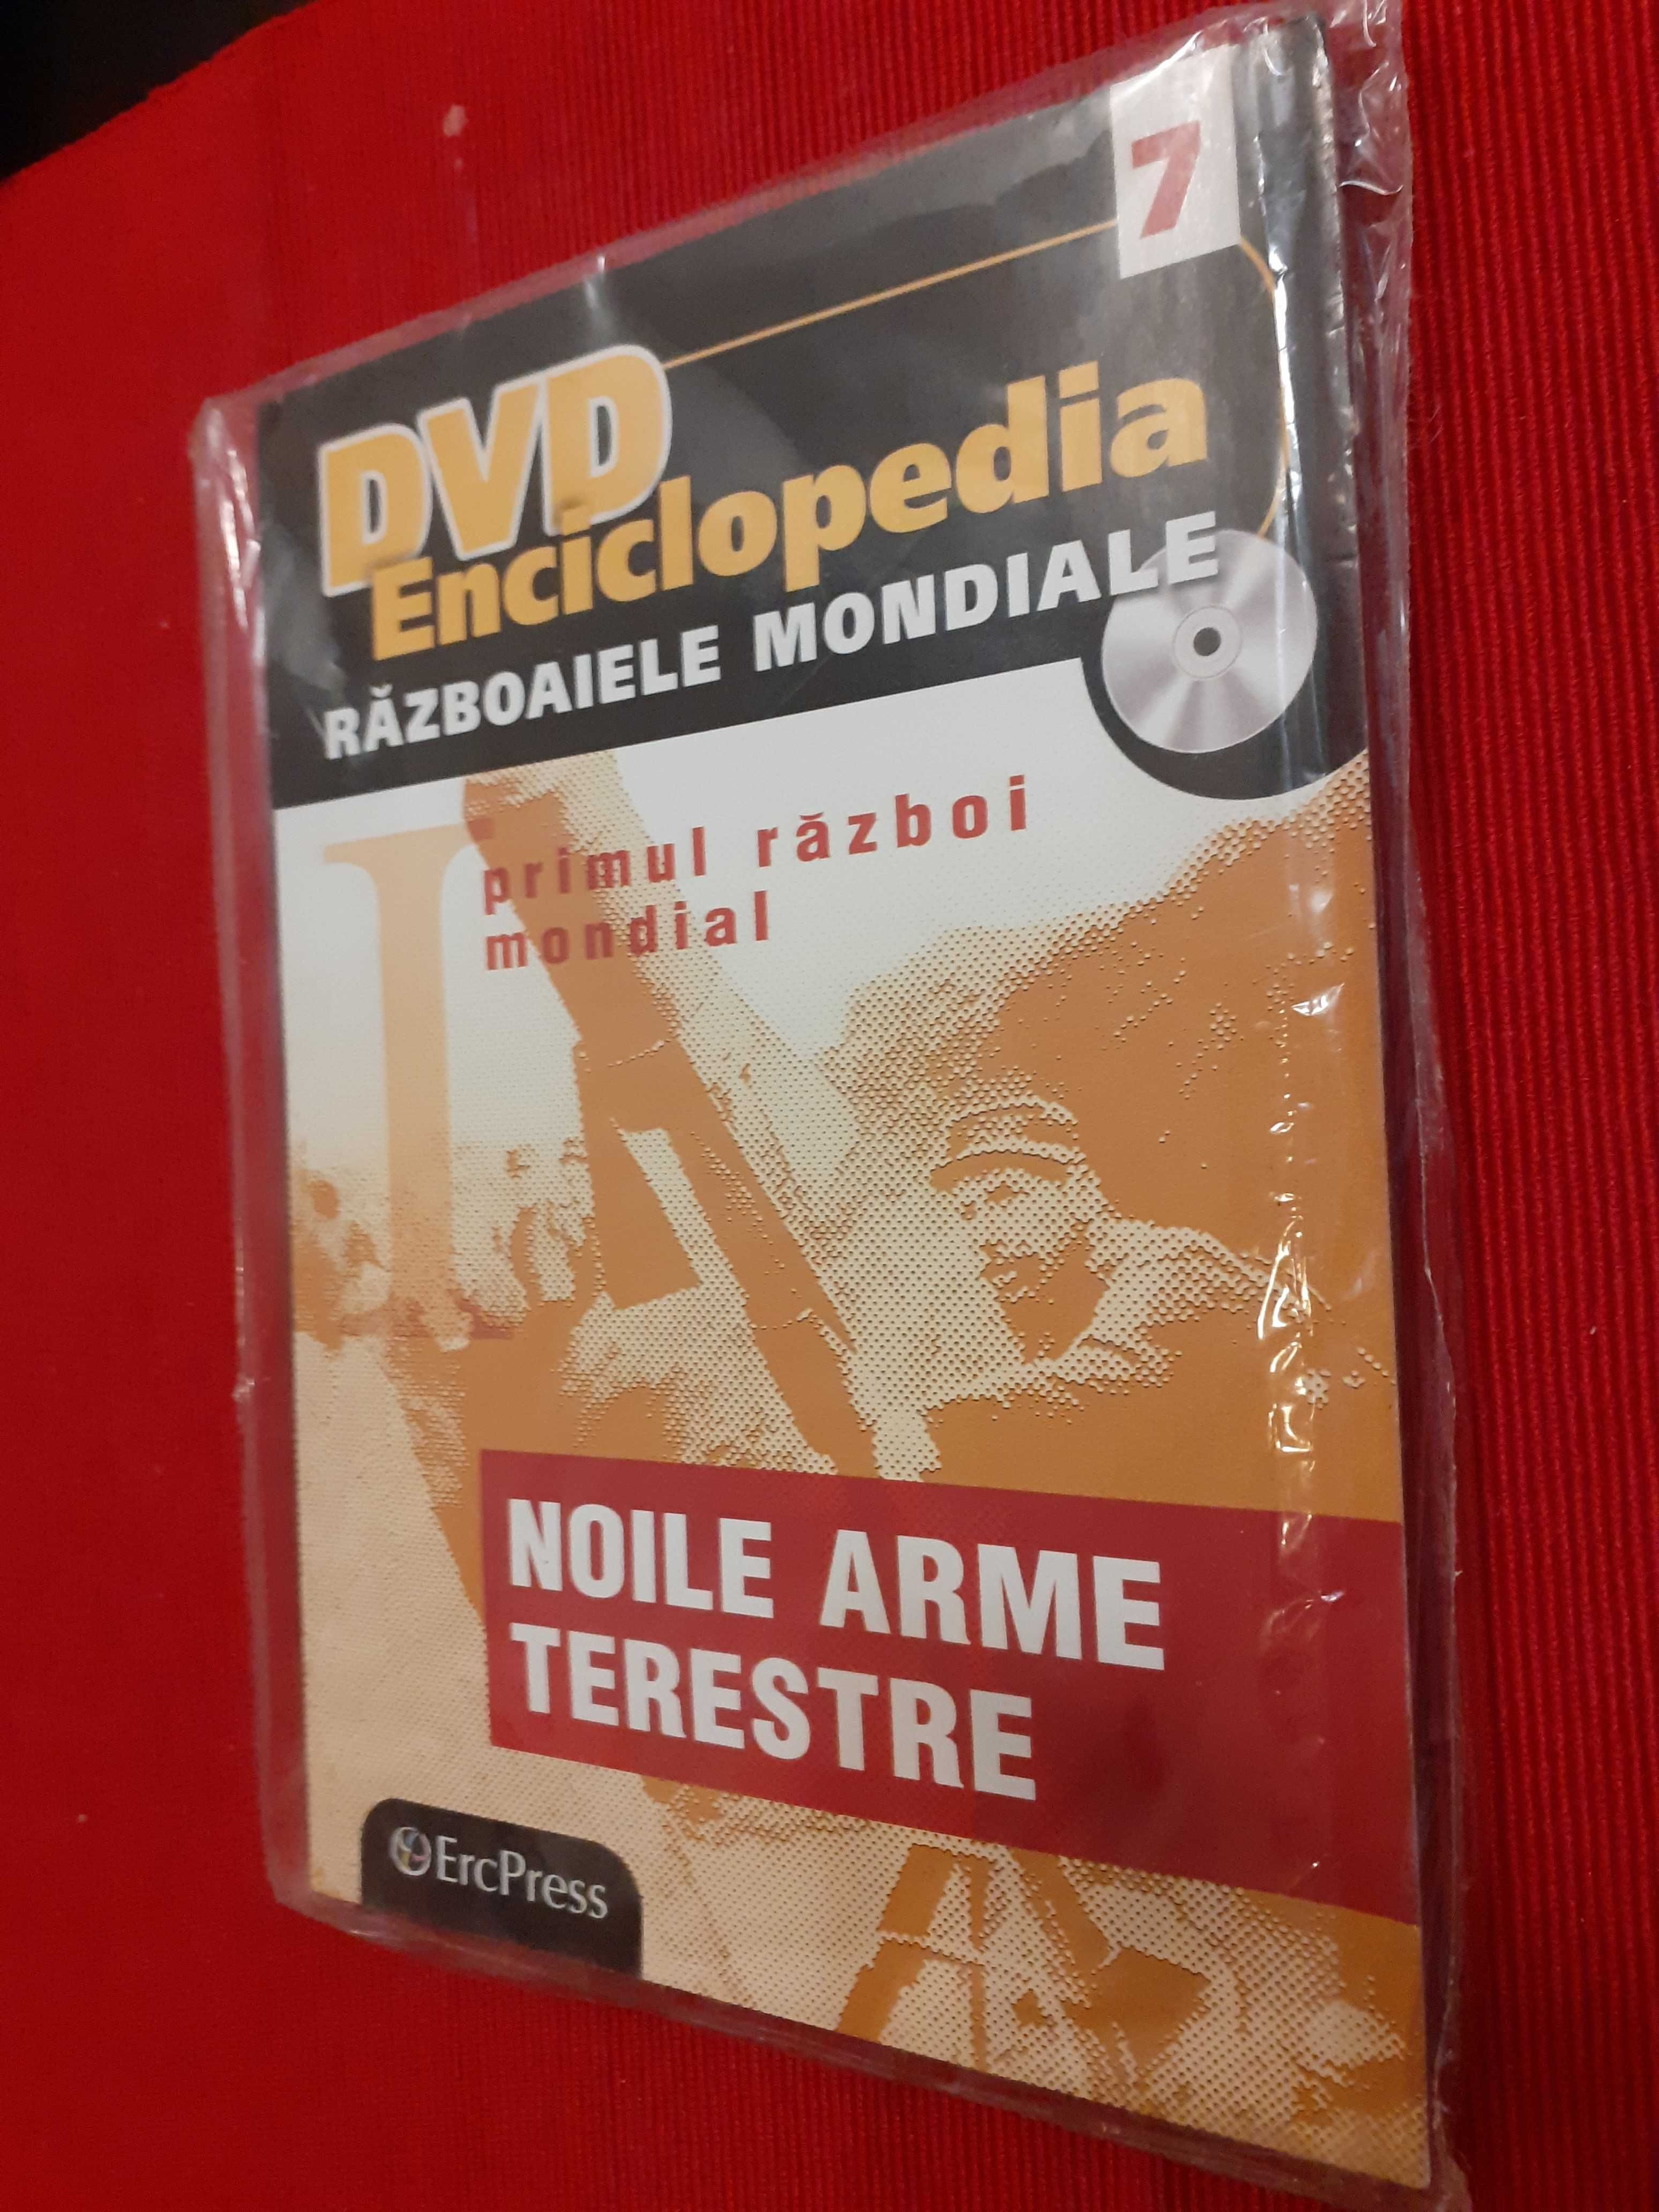 DVD Enciclopedia Razboaielor nr. 7 - Noile arme terestre WW I